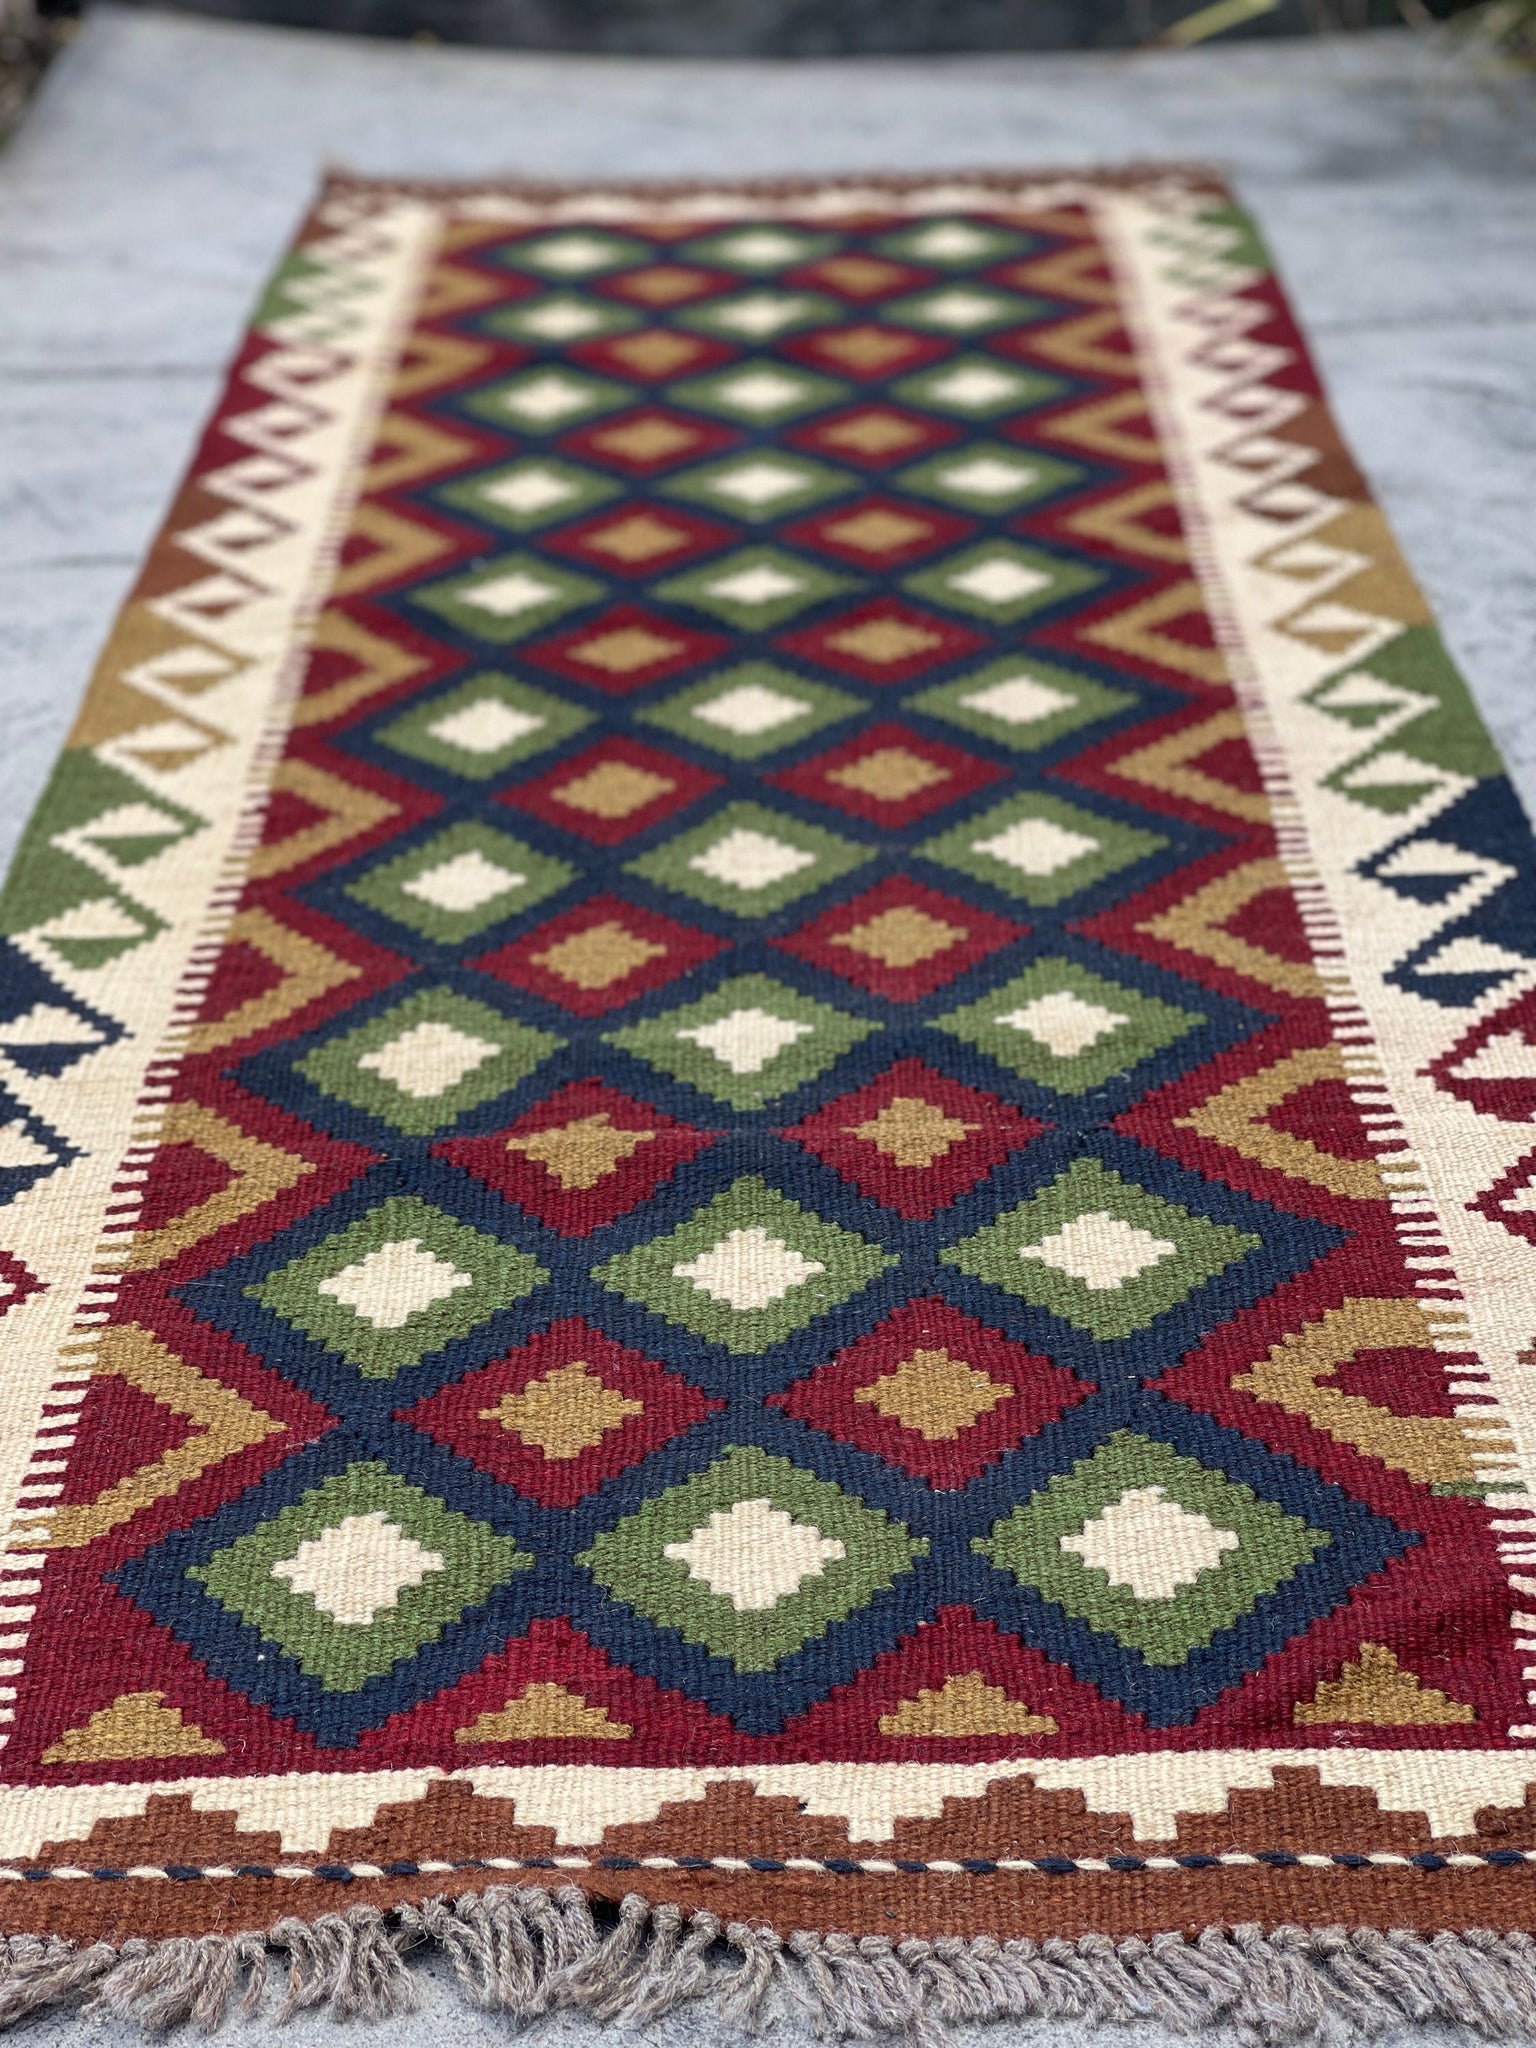 2x7 (60x215) Handmade Afghan Kilim Rug | Ivory Khaki Gold Brown Red Green Blue | Boho Bohemian Vintage Tribal Moroccan Turkish Outdoor